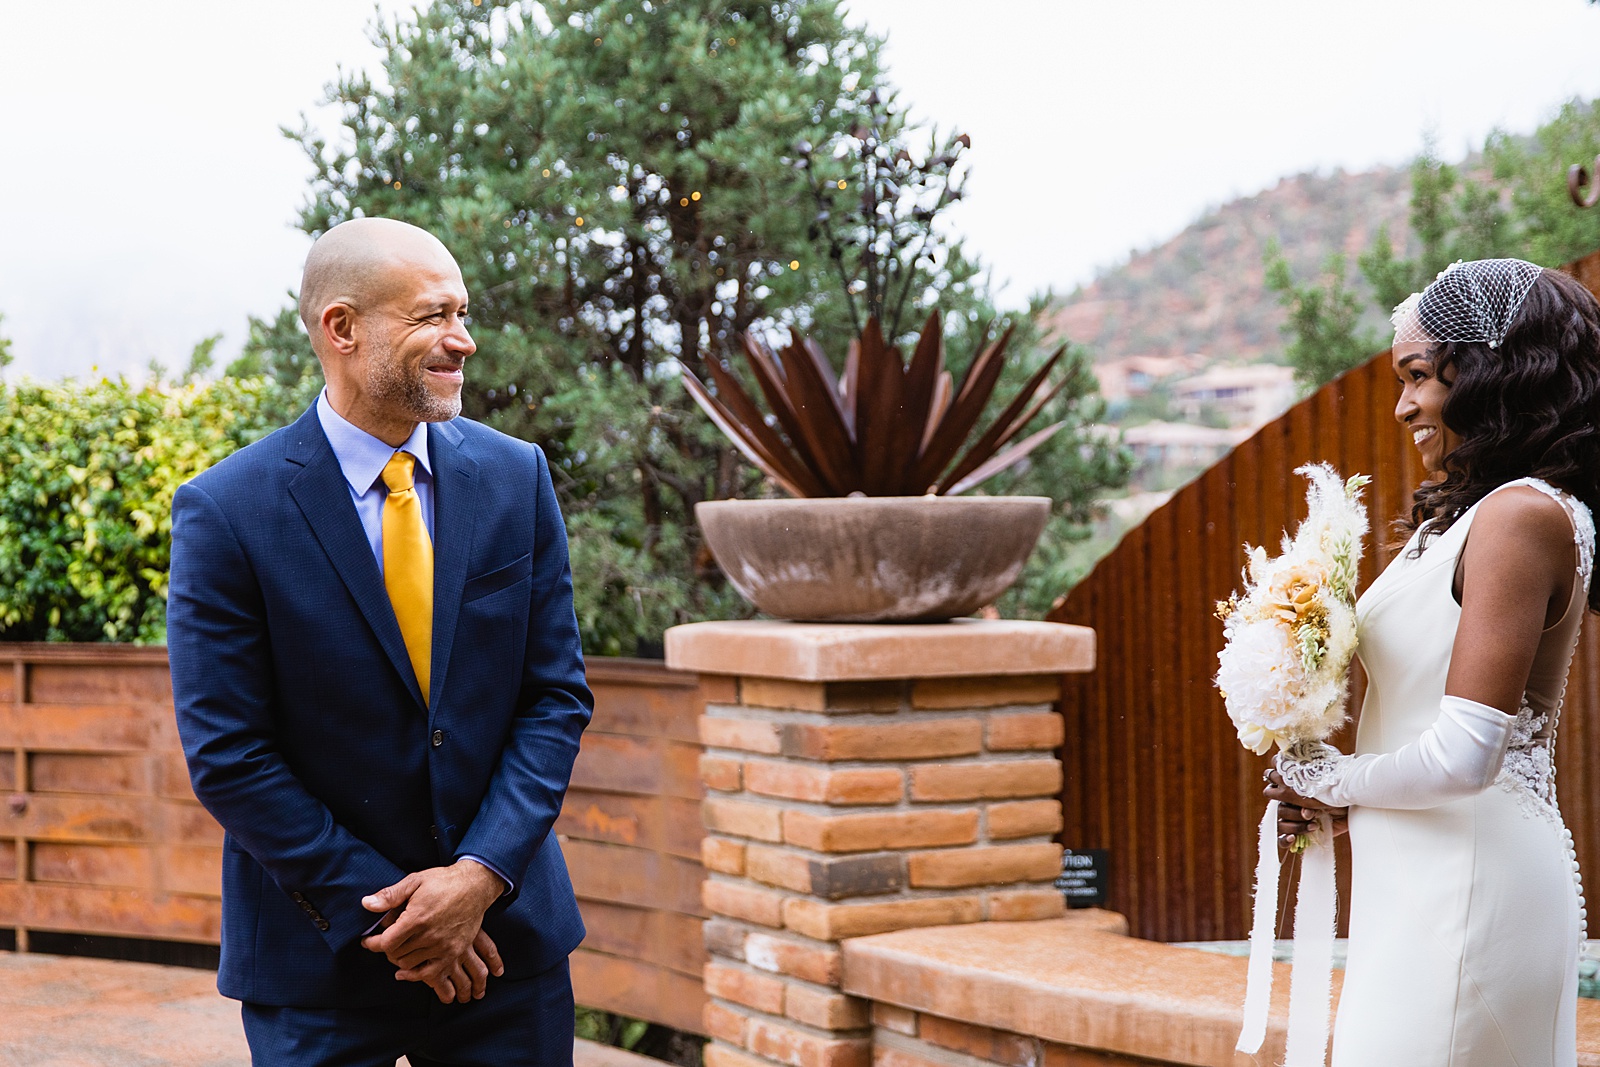 Newlyweds's first look at Agave of Sedona by Arizona wedding photographer PMA Photography.